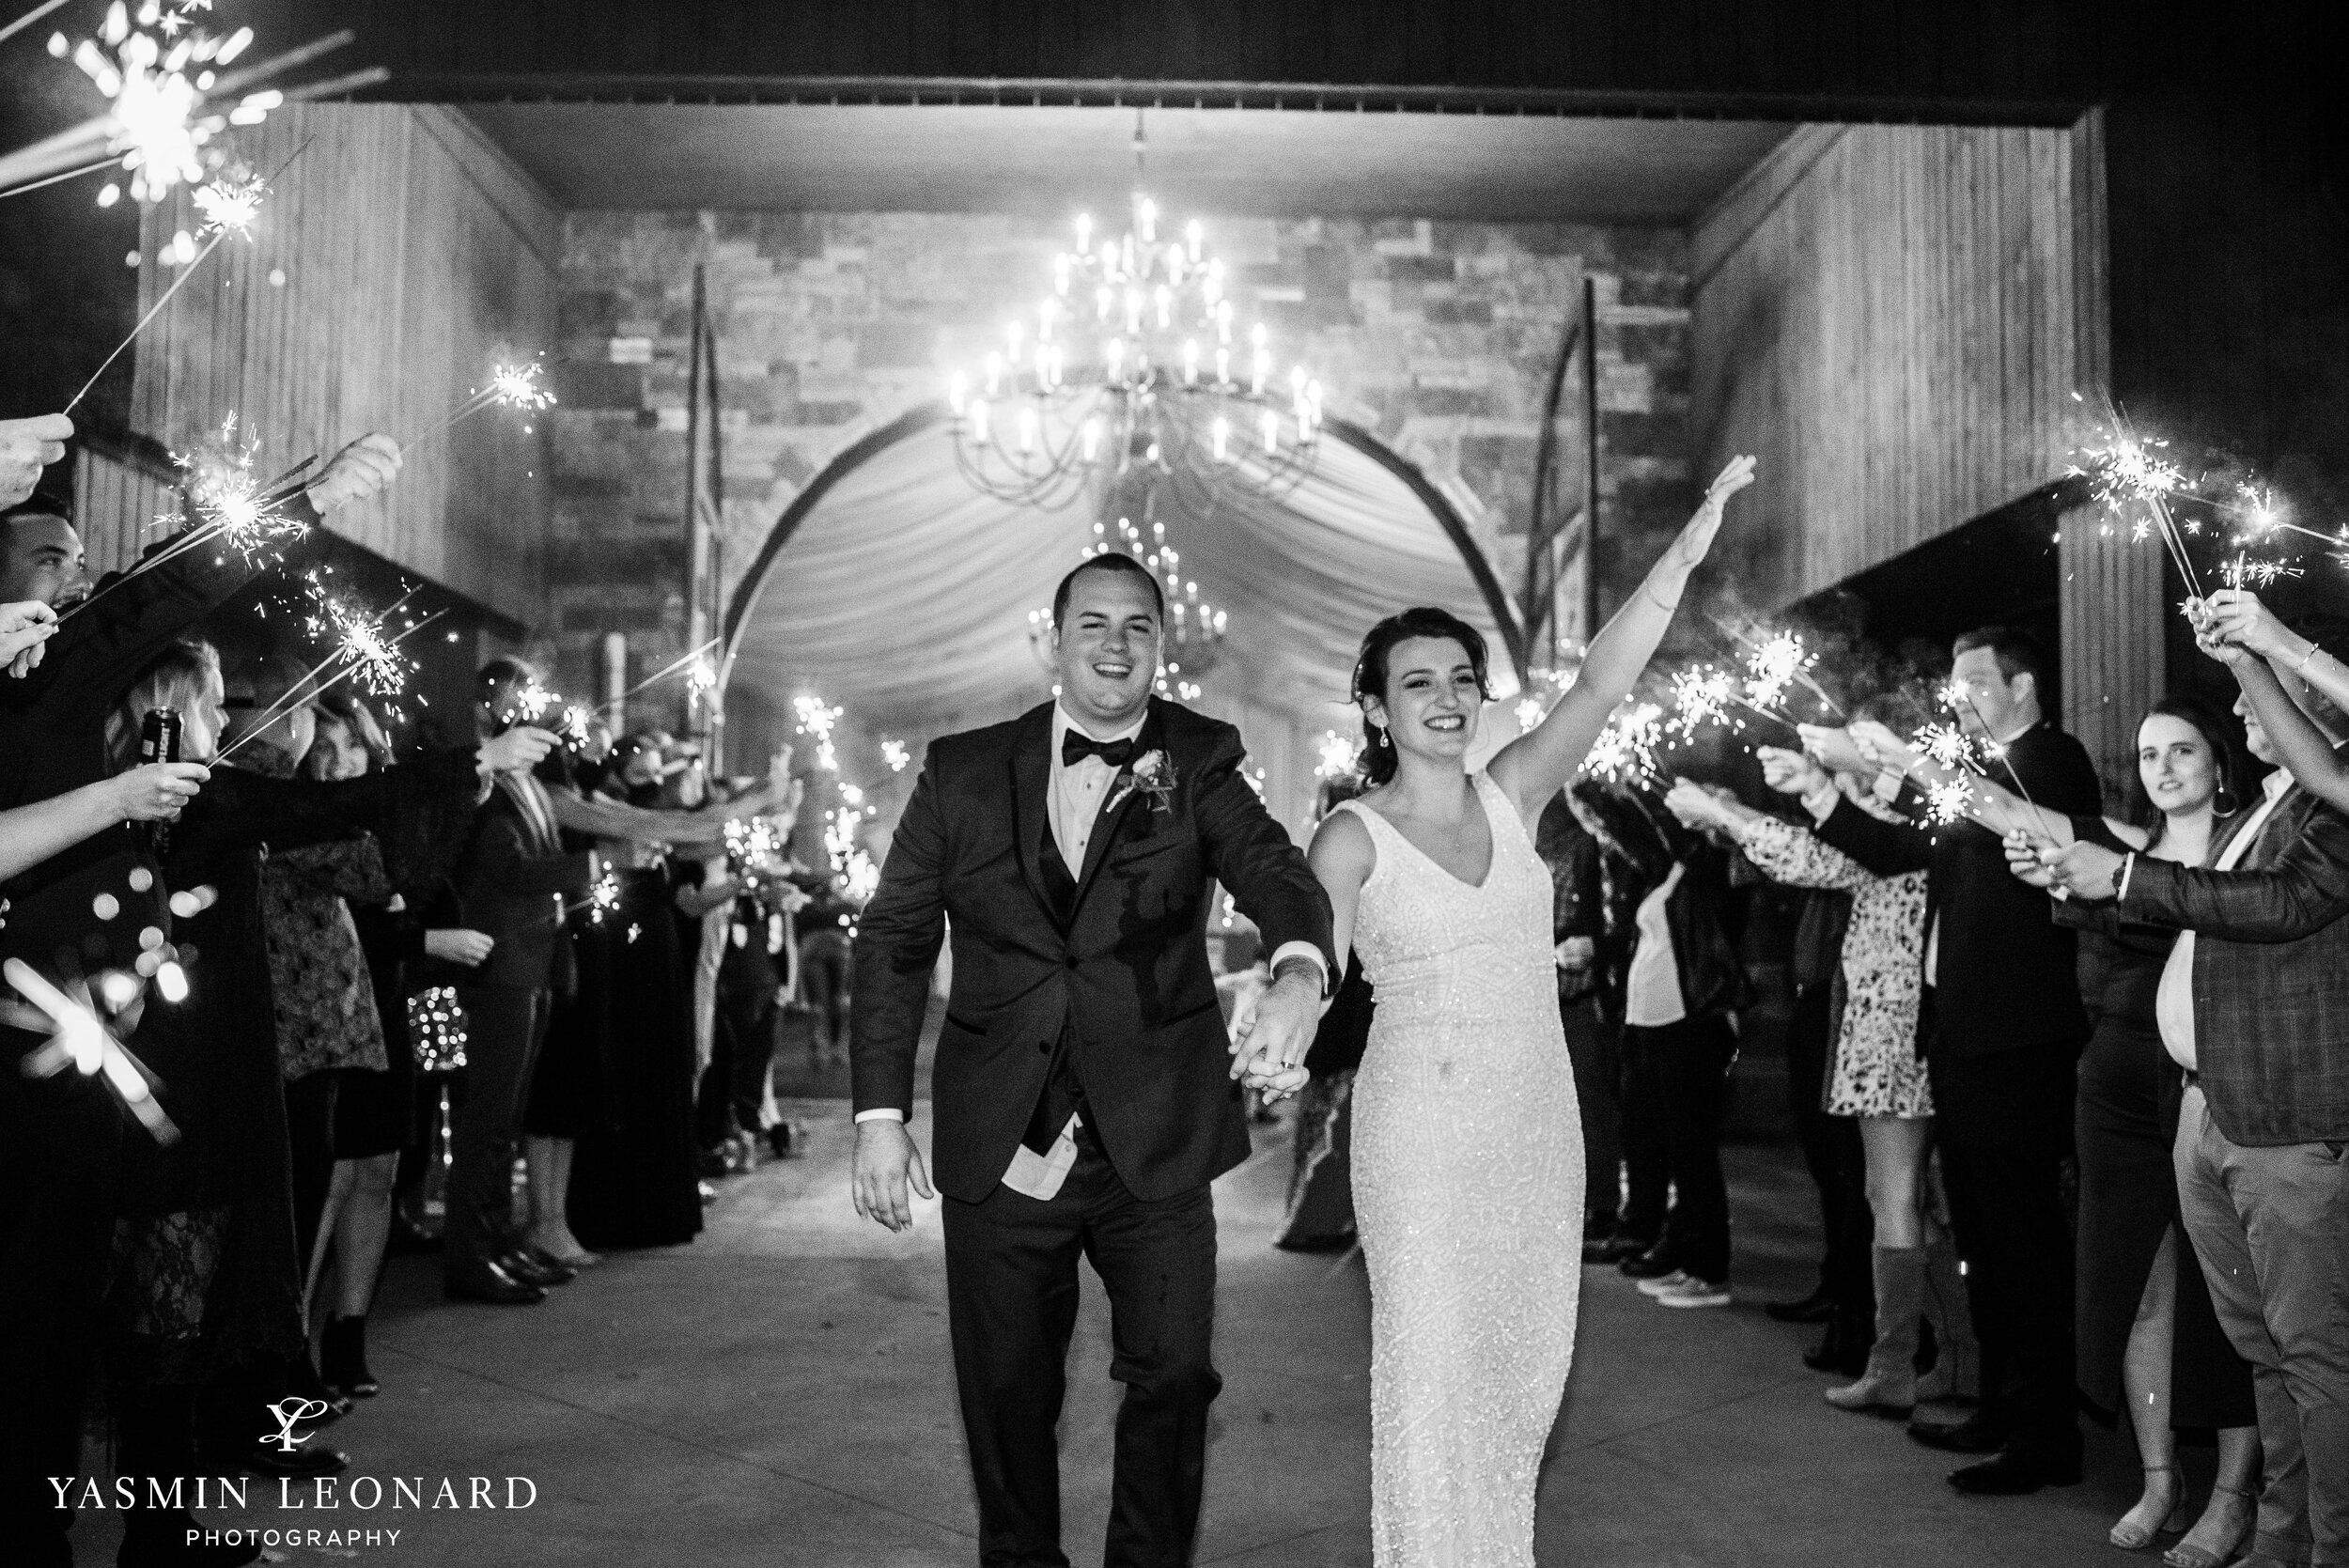 Jared and Katy - Adaumont Farms - High Point Weddings - NC Barn Weddings - Yasmin Leonard Photography-52.jpg